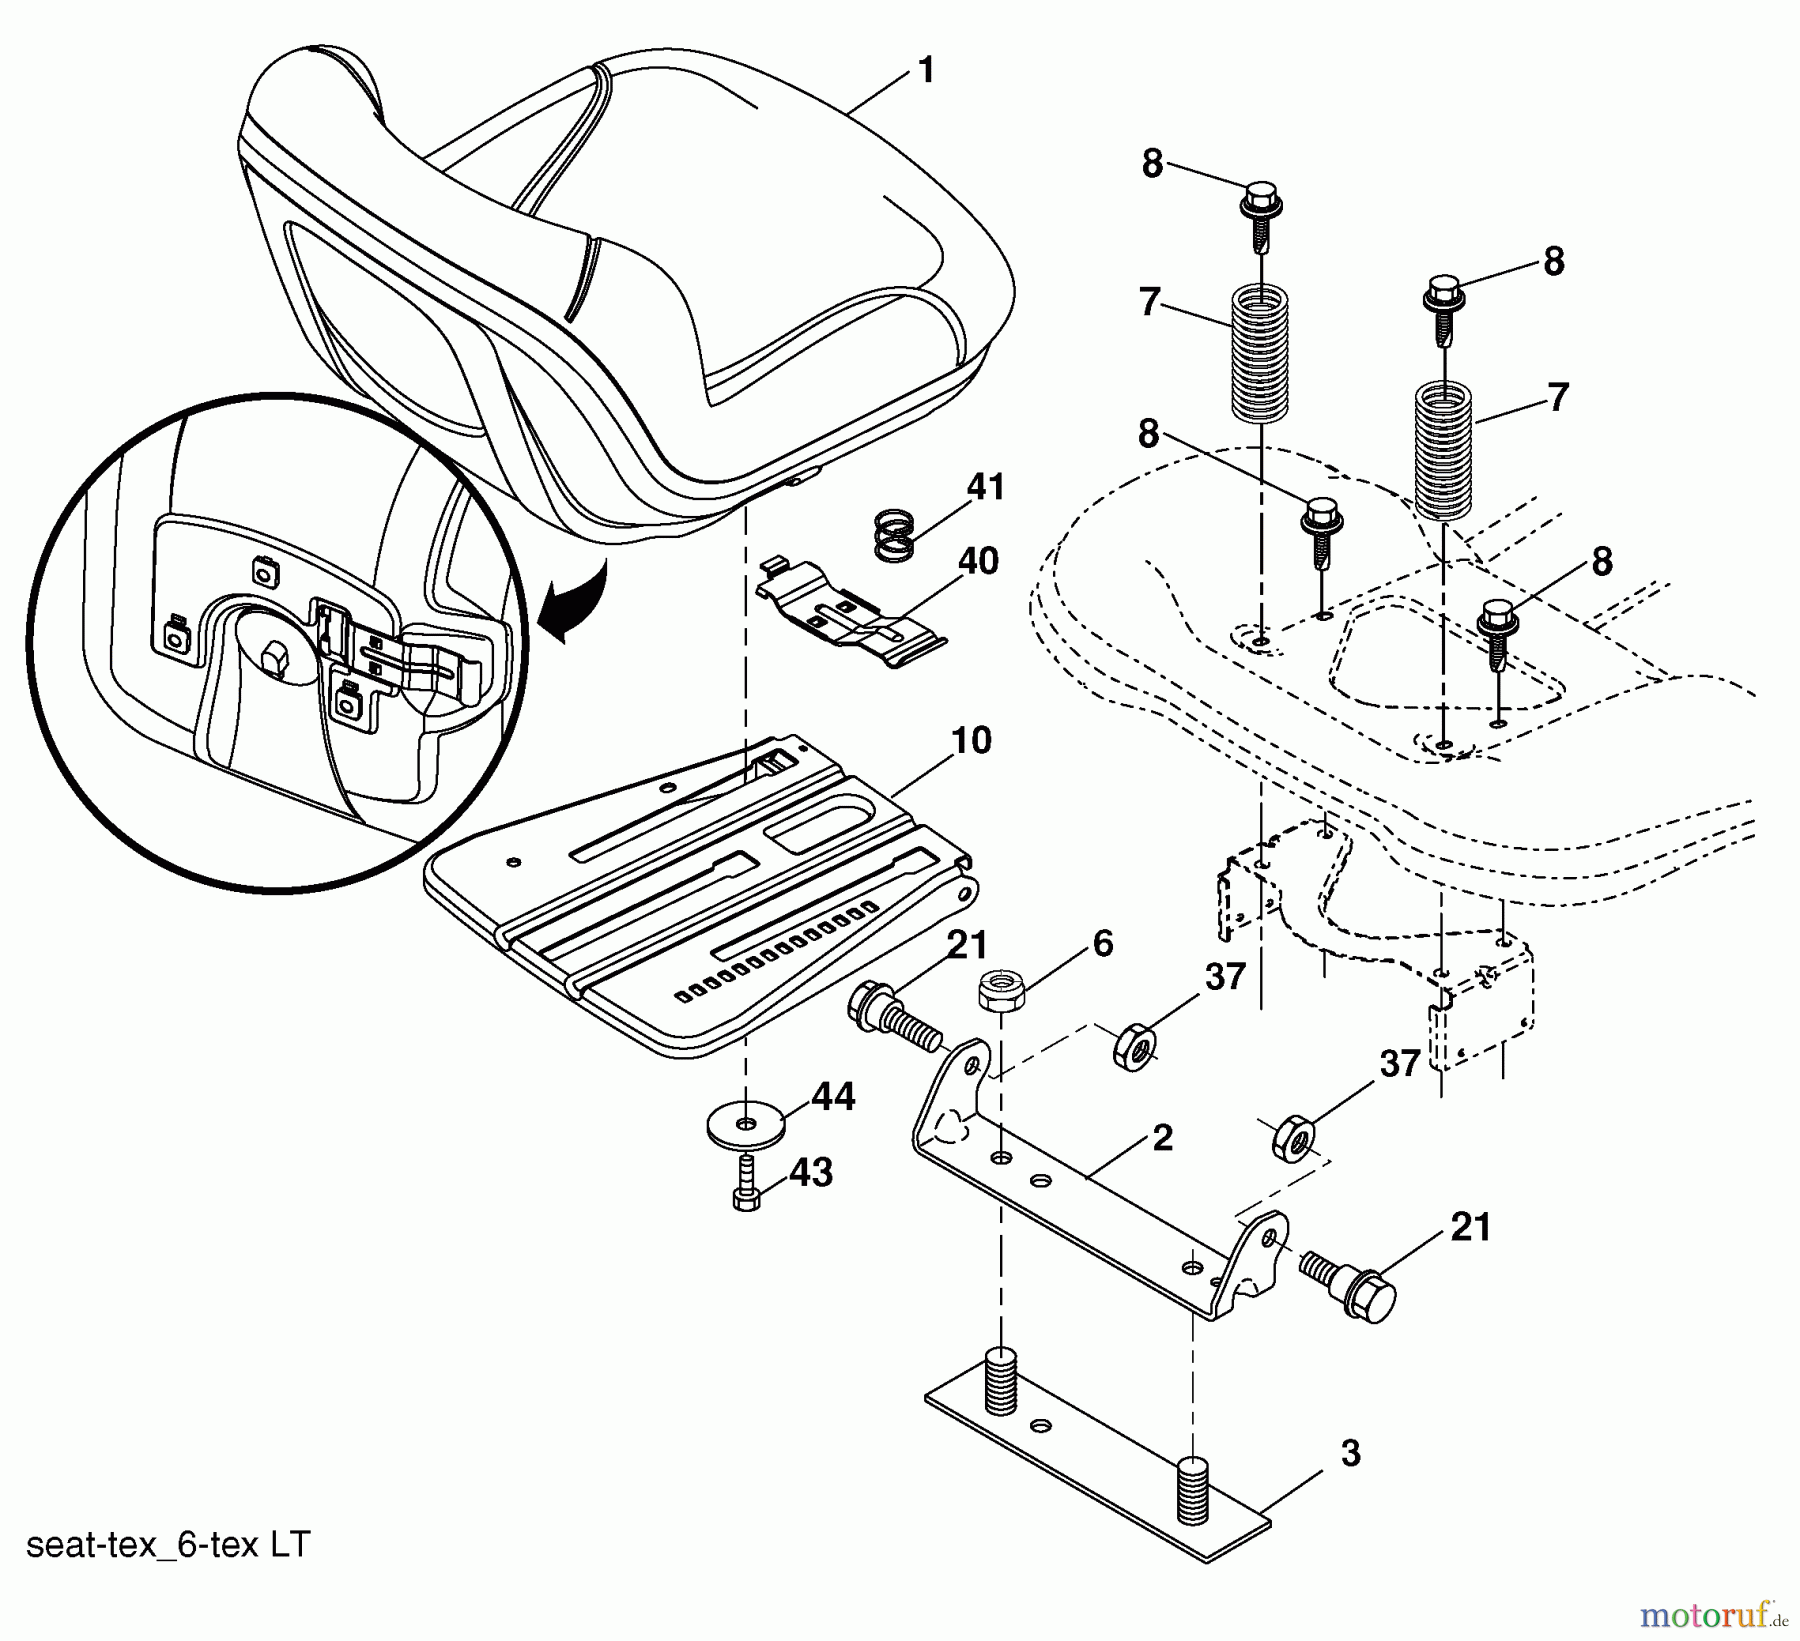  Husqvarna Rasen und Garten Traktoren LTH 18538 (917.289600) - Husqvarna Lawn Tractor (SEARS) (2010-05 & After) (Sears Craftsman) Seat Assembly